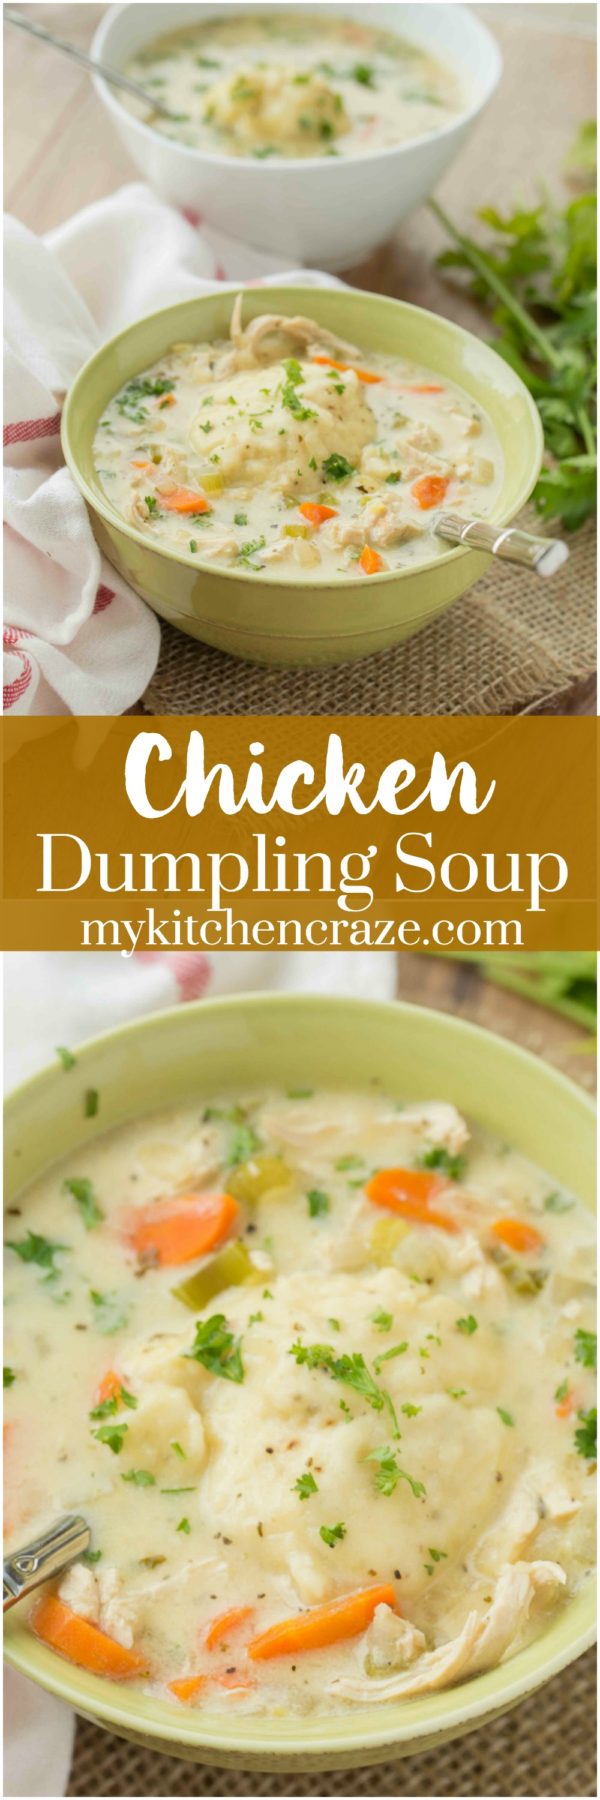 Chicken Dumpling Soup plus a Recipe Video - My Kitchen Craze